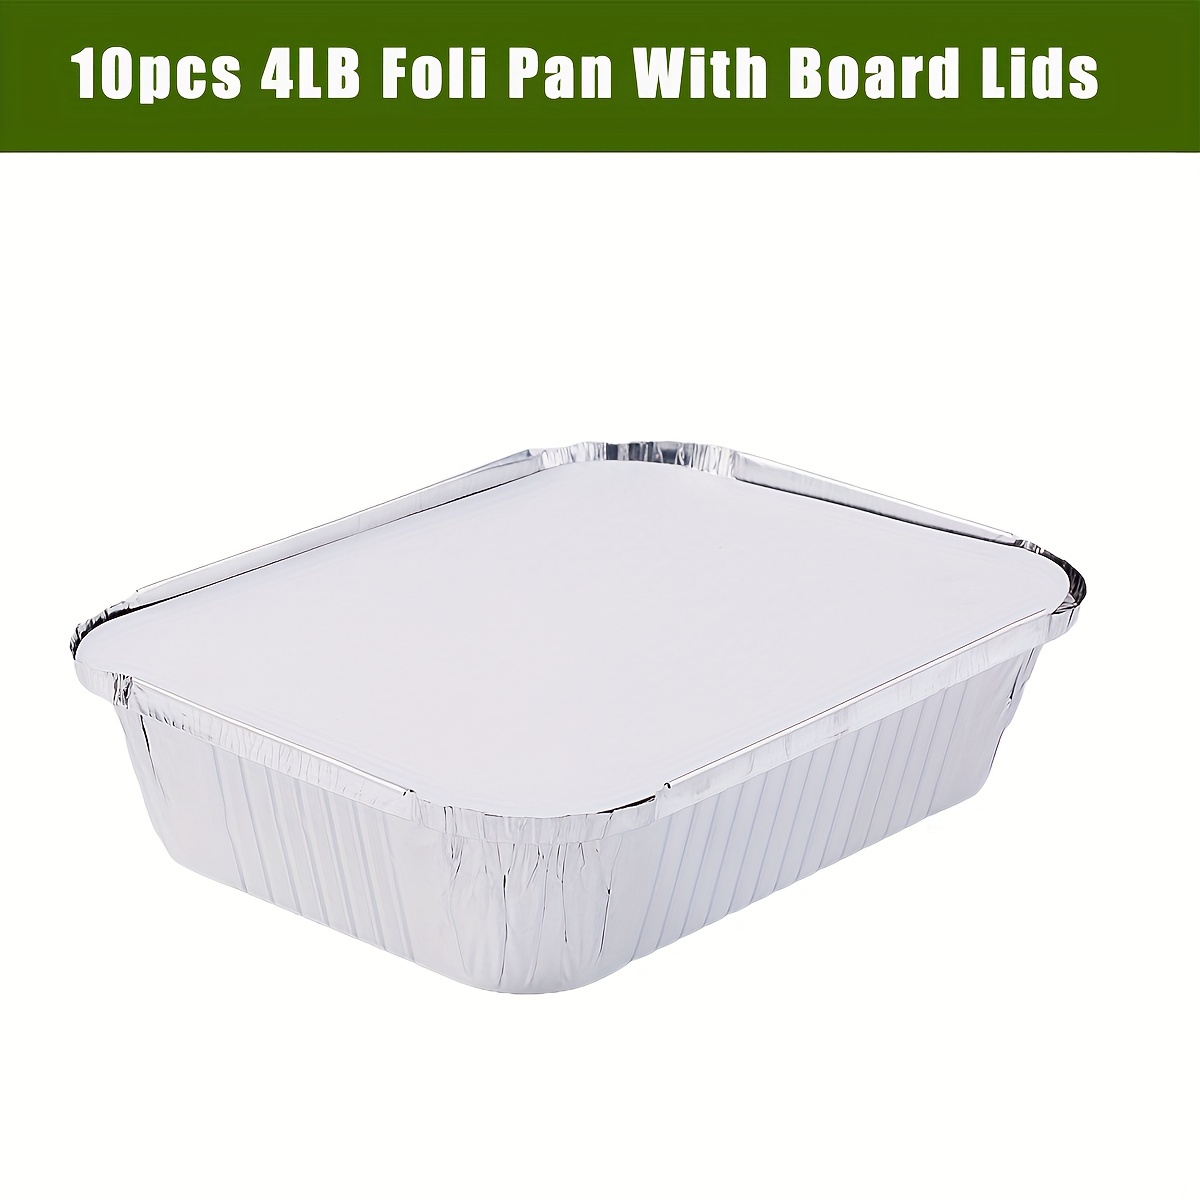 Heavy Duty Disposable Aluminum Oblong Foil Pans With Lid Covers